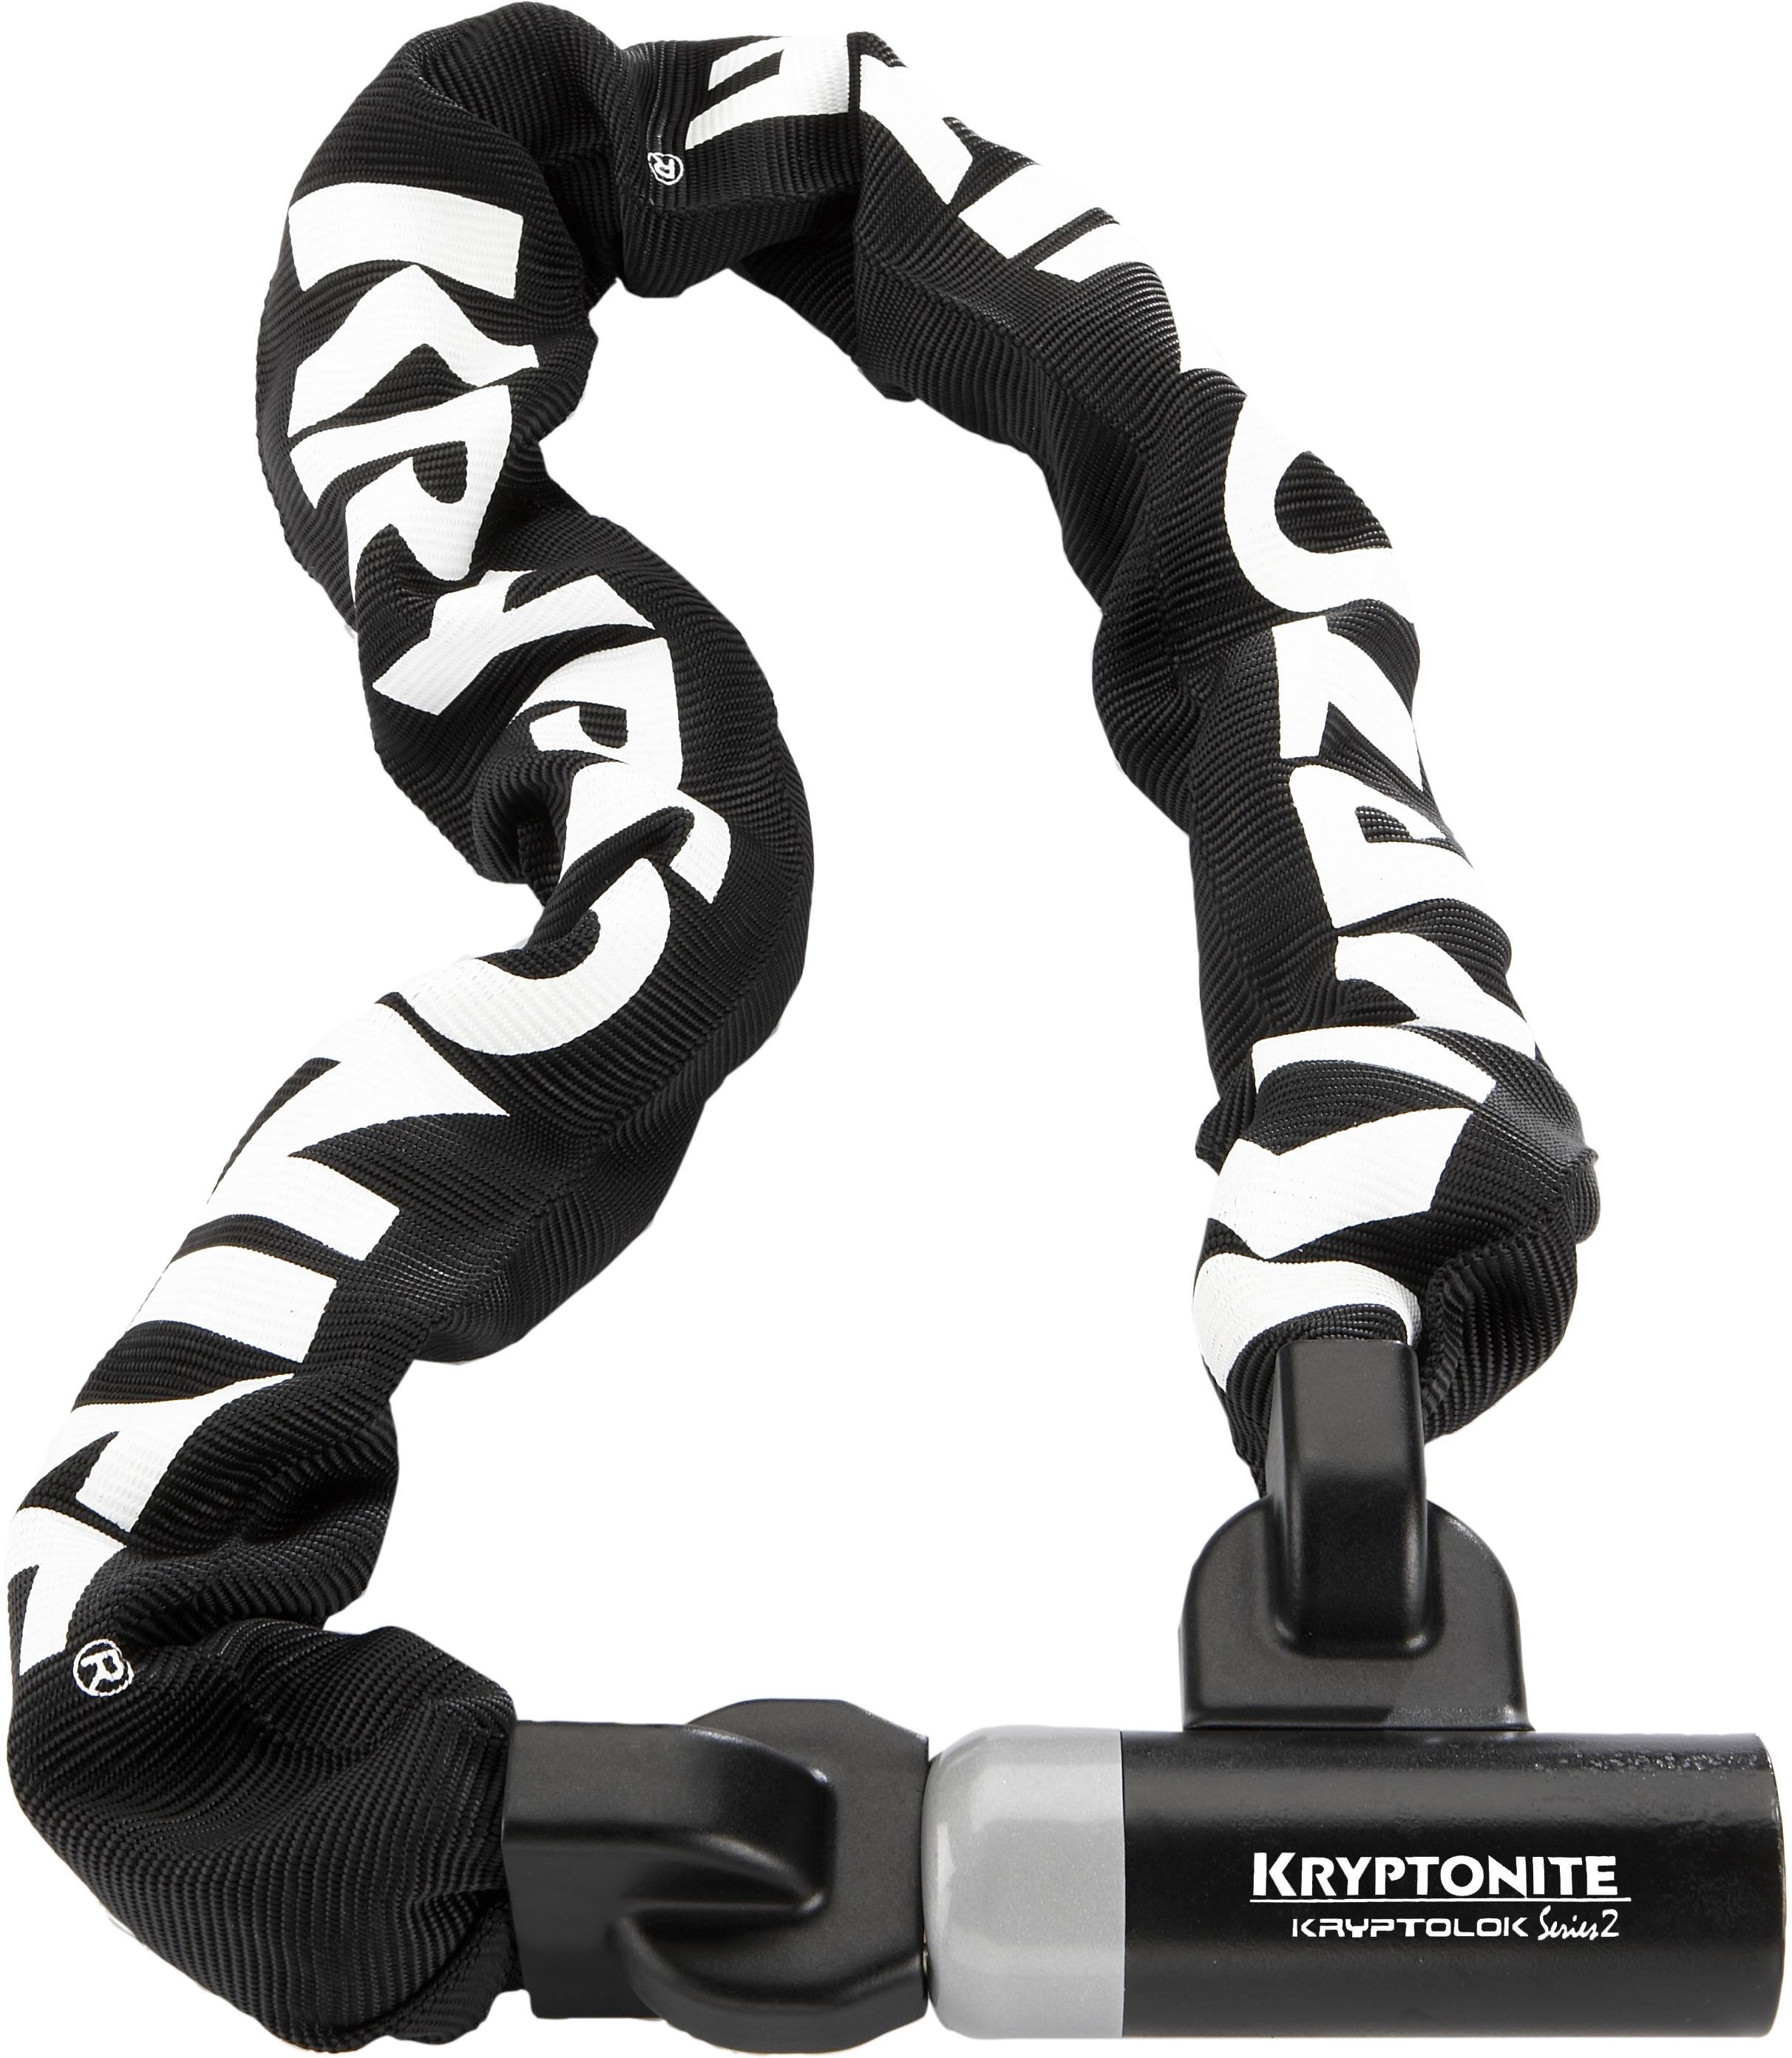 Kryptonite Kryptolok Series 2 995 Integrated Chain - Black/orange